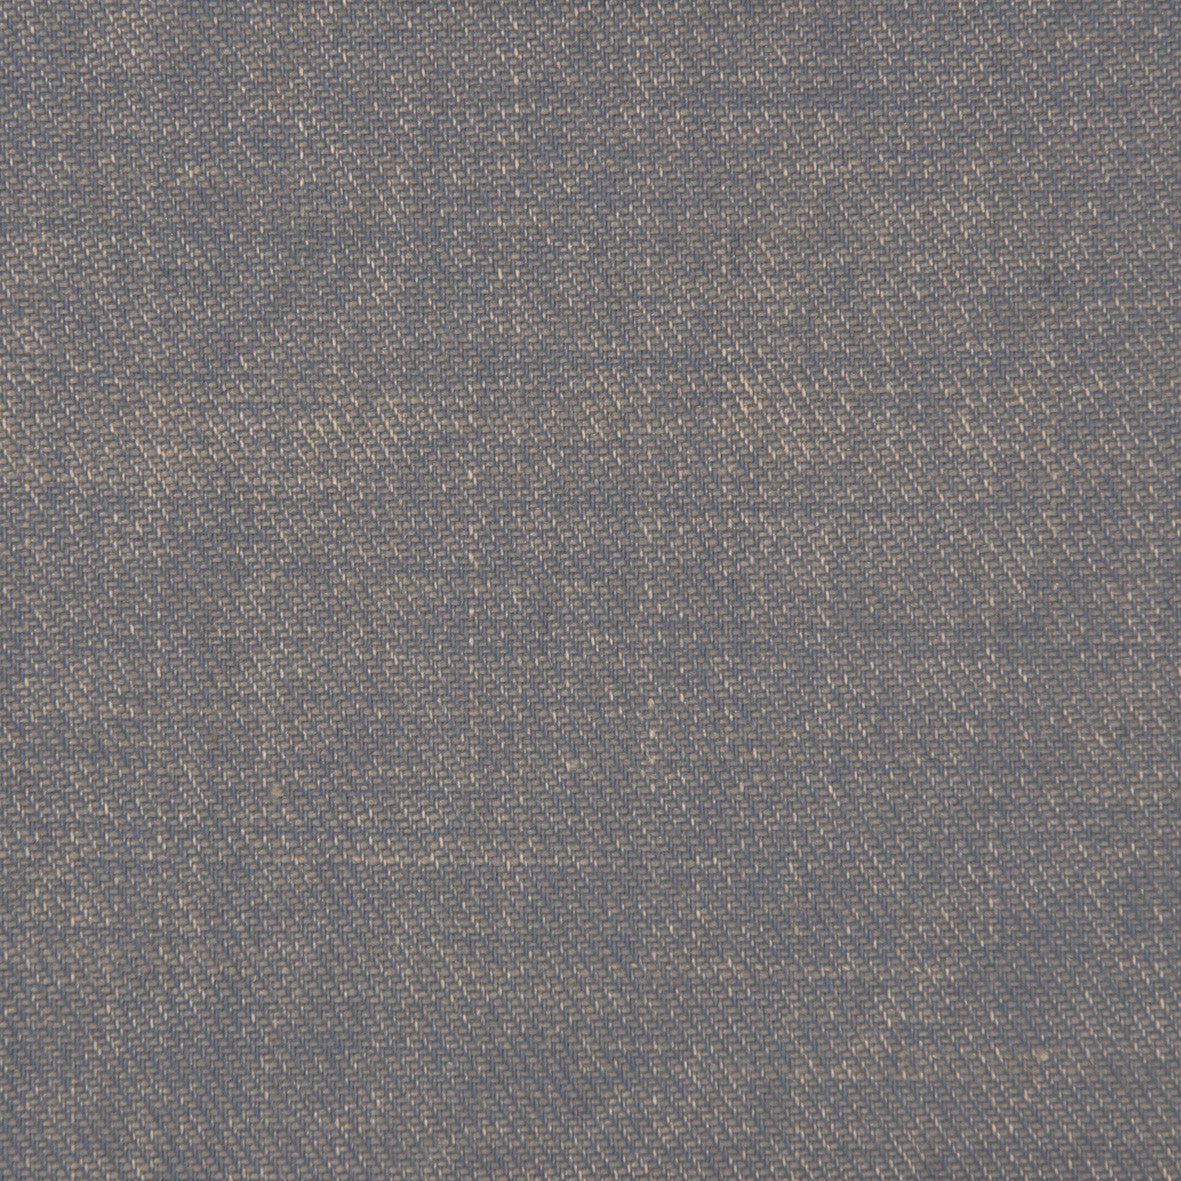 Indigo Waxed Fabric 901 - Fabrics4Fashion